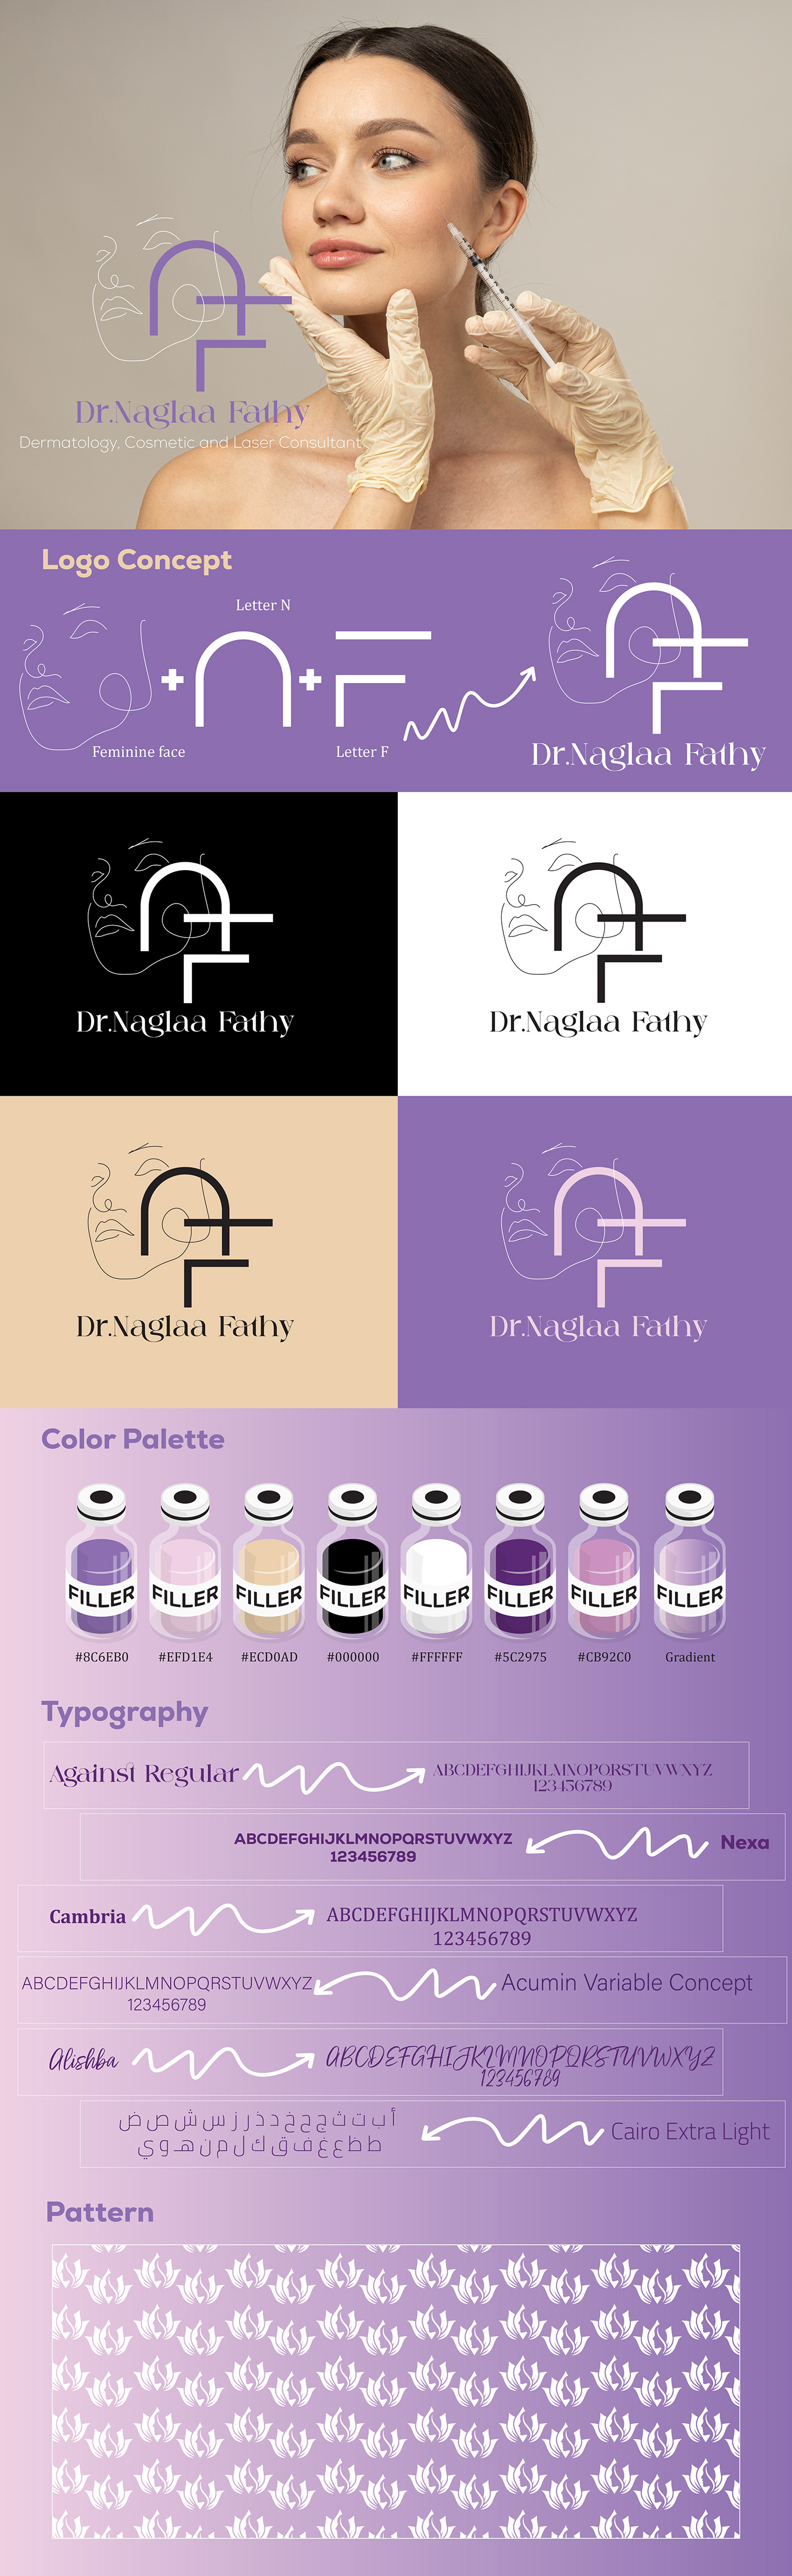 plastic surgery beauty woman feminine Logo Design brand identity visual Brand Design visual identity Logotype